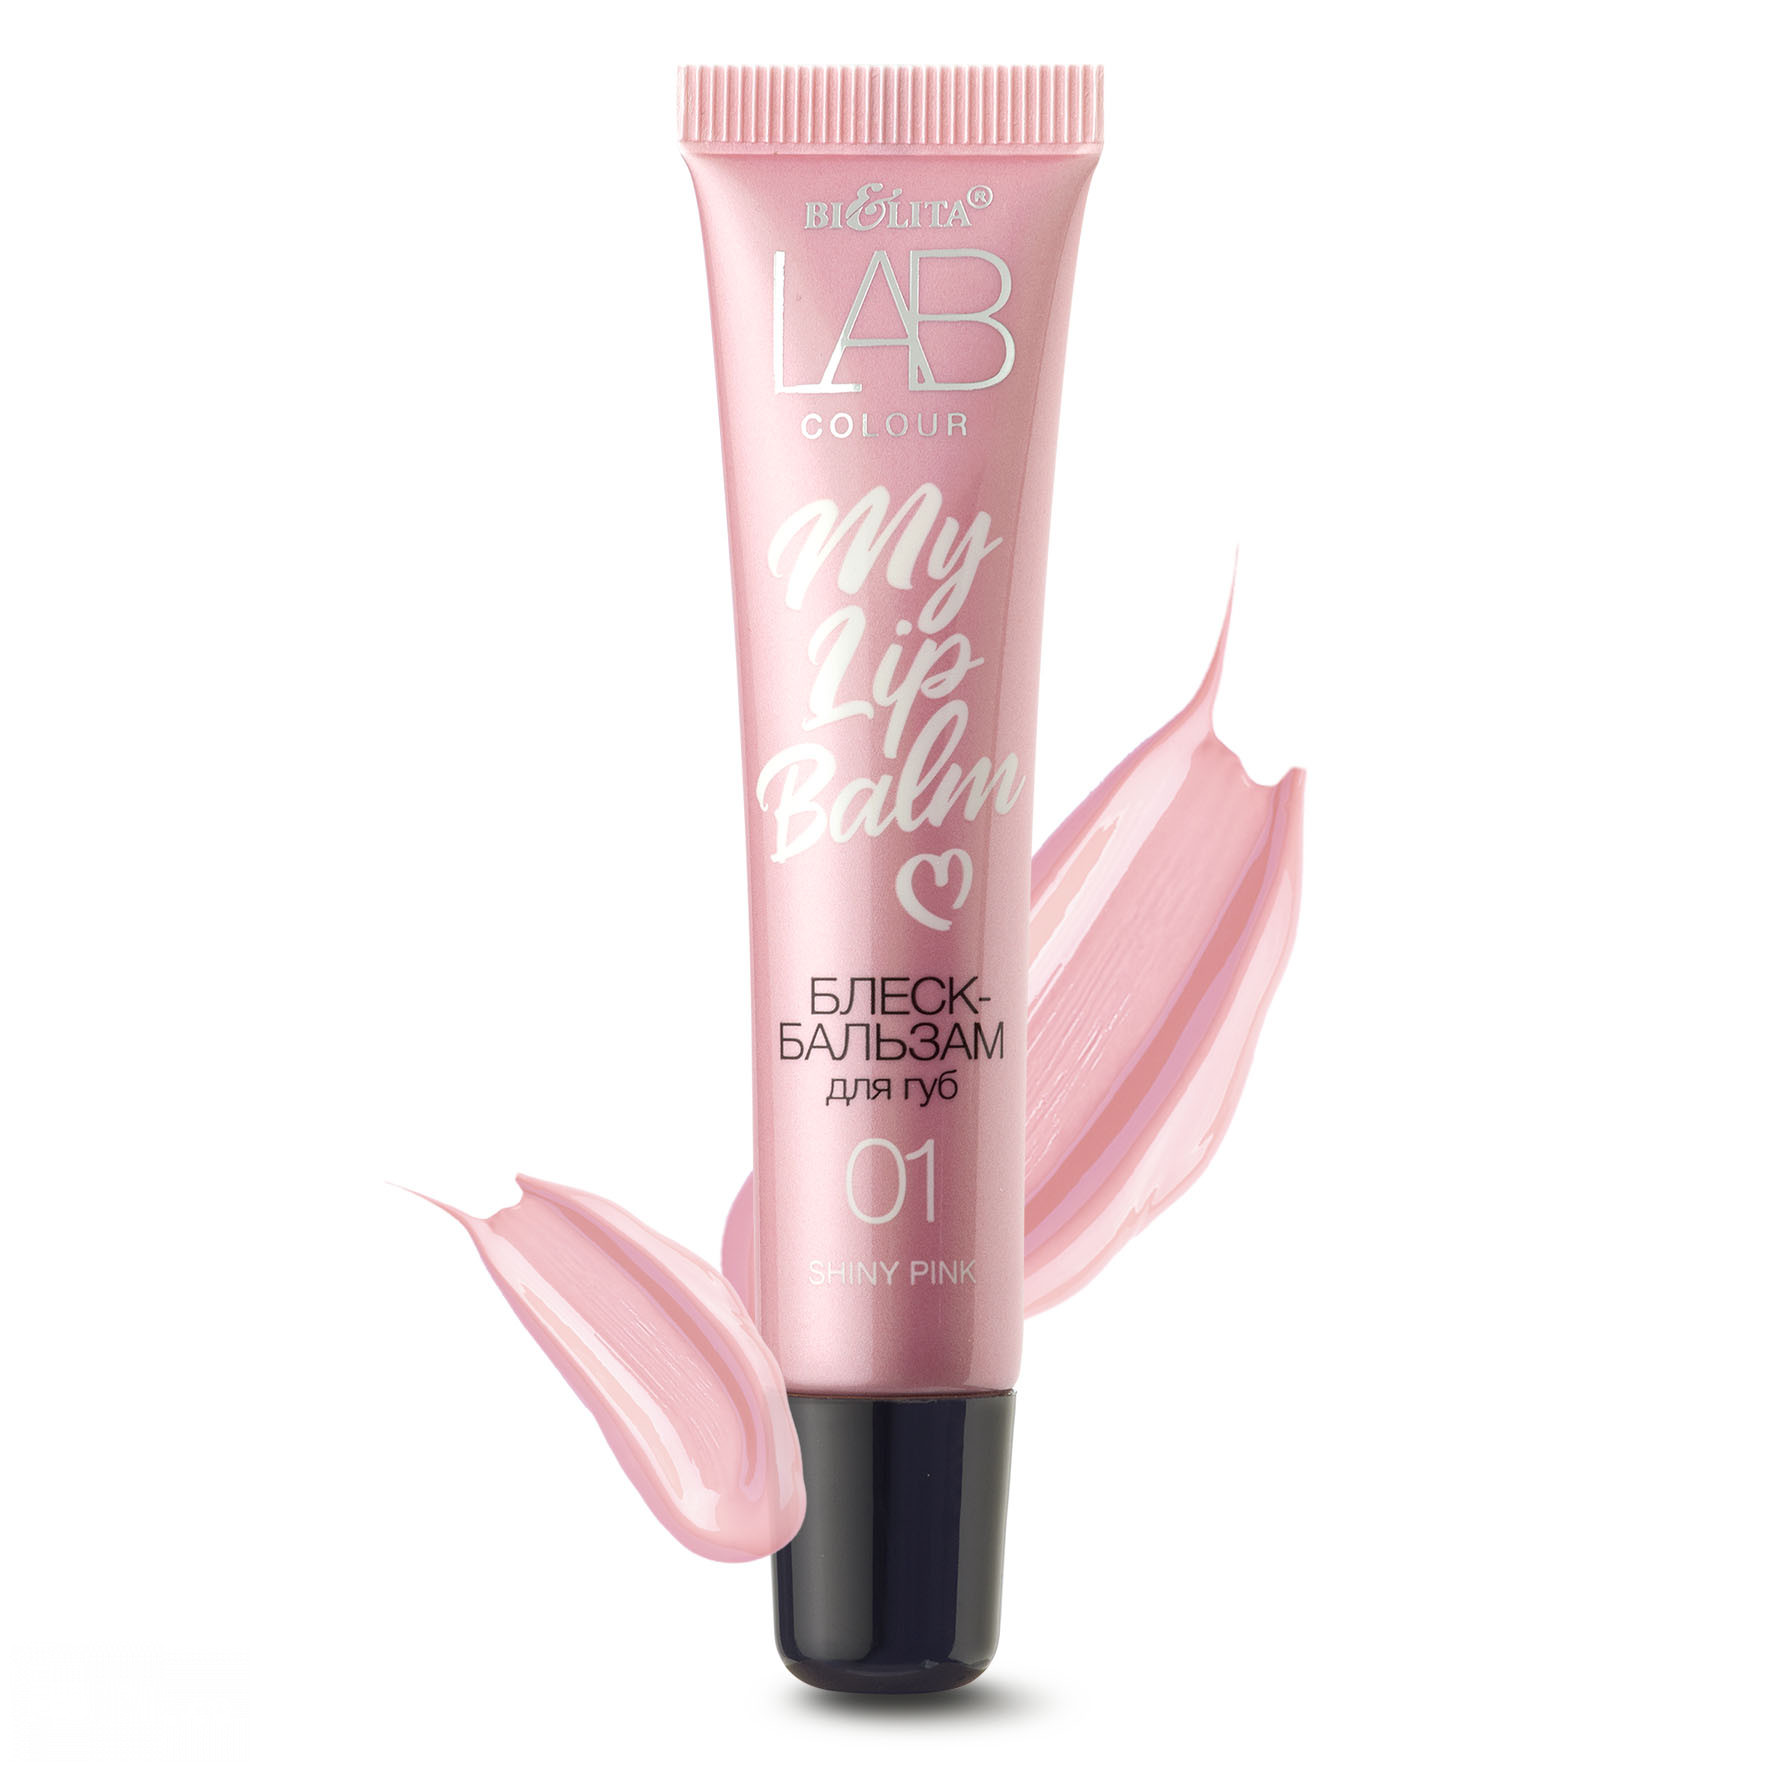 Блеск-бальзам для губ Белита LAB colour My Lipbalm 01 Shiny Pink 15мл освежающий ароматический комплекс pink dream